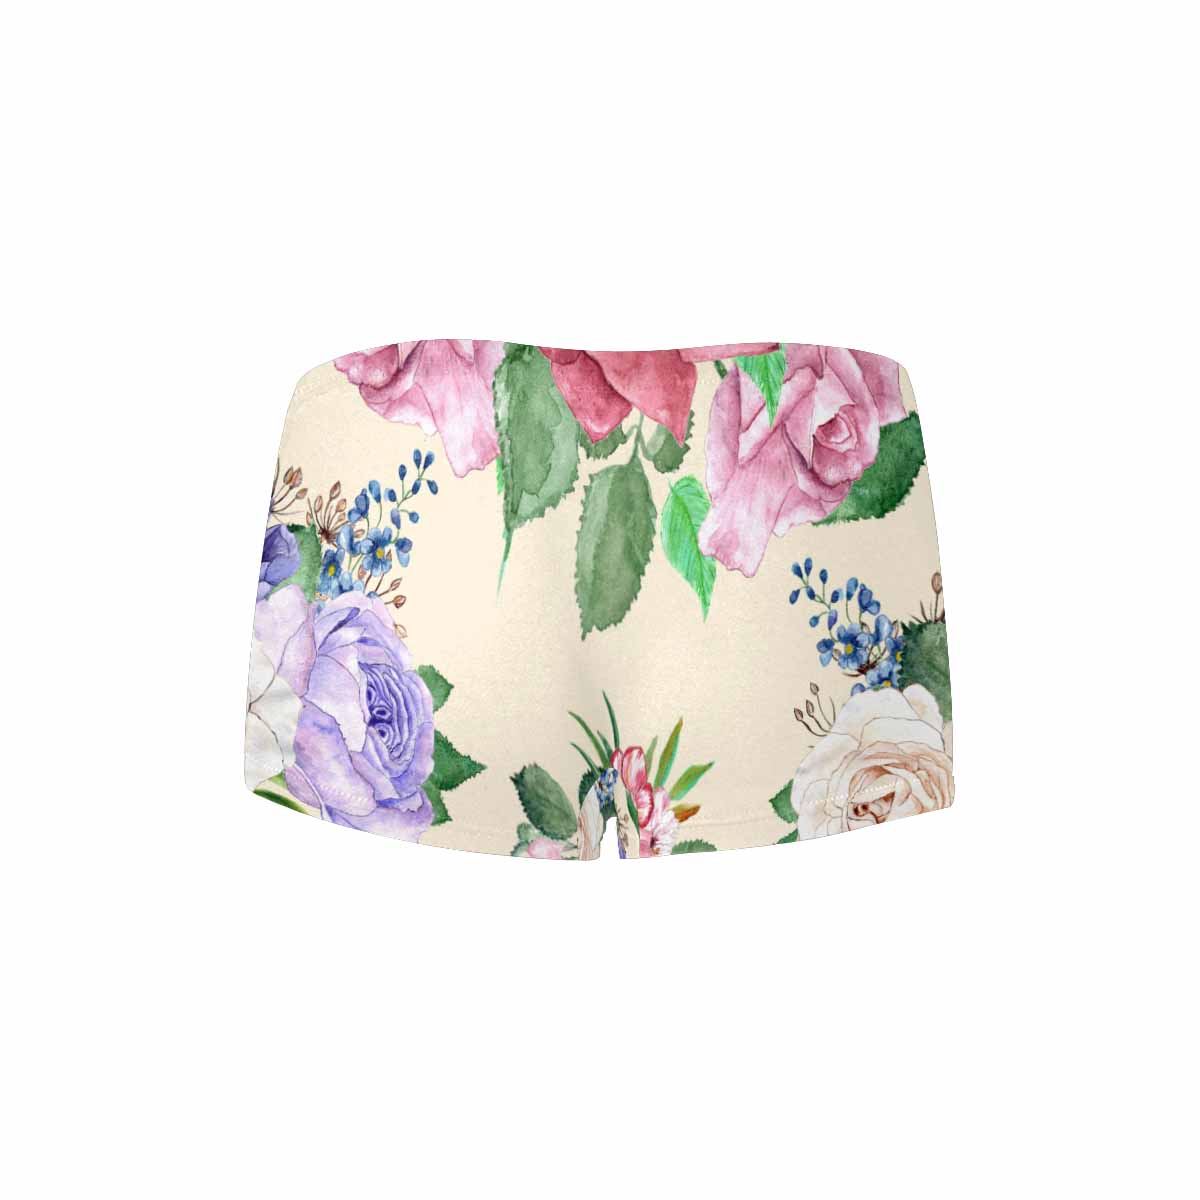 Floral 2, boyshorts, daisy dukes, pum pum shorts, panties, design 60